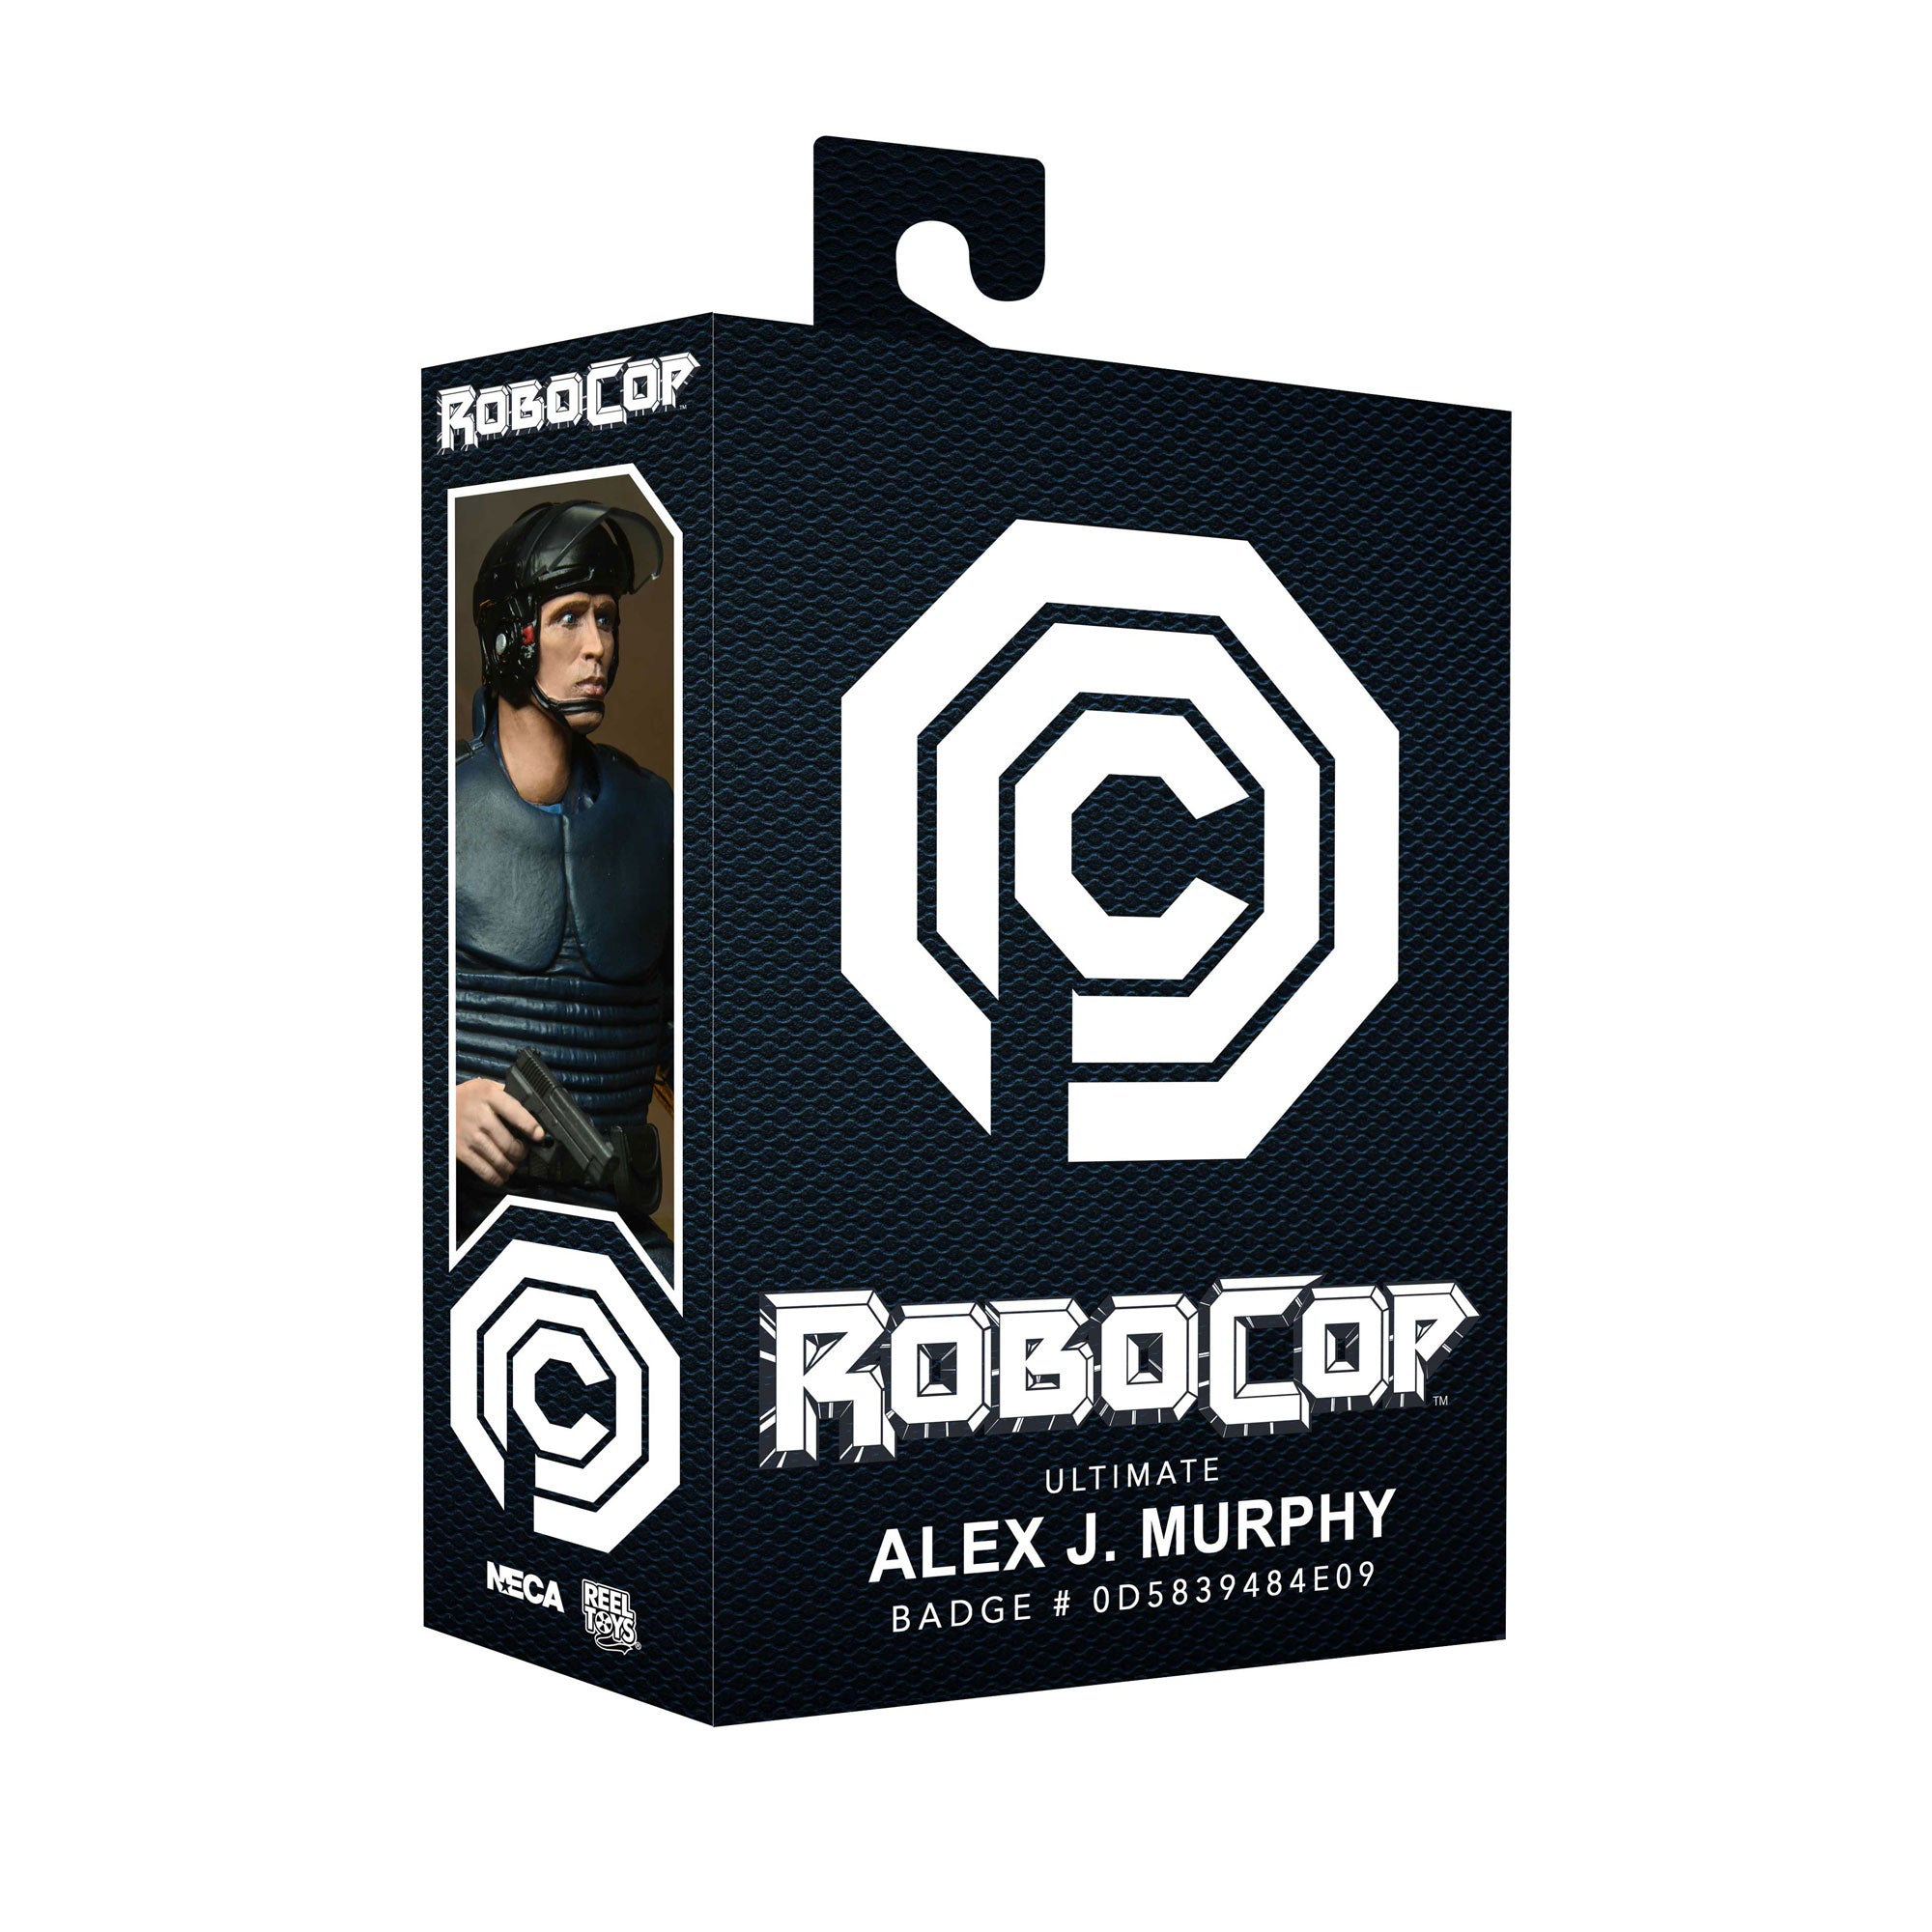 RoboCop Ultimate Alex Murphy (OCP Uniform) 7" Scale Action Figure Packaging